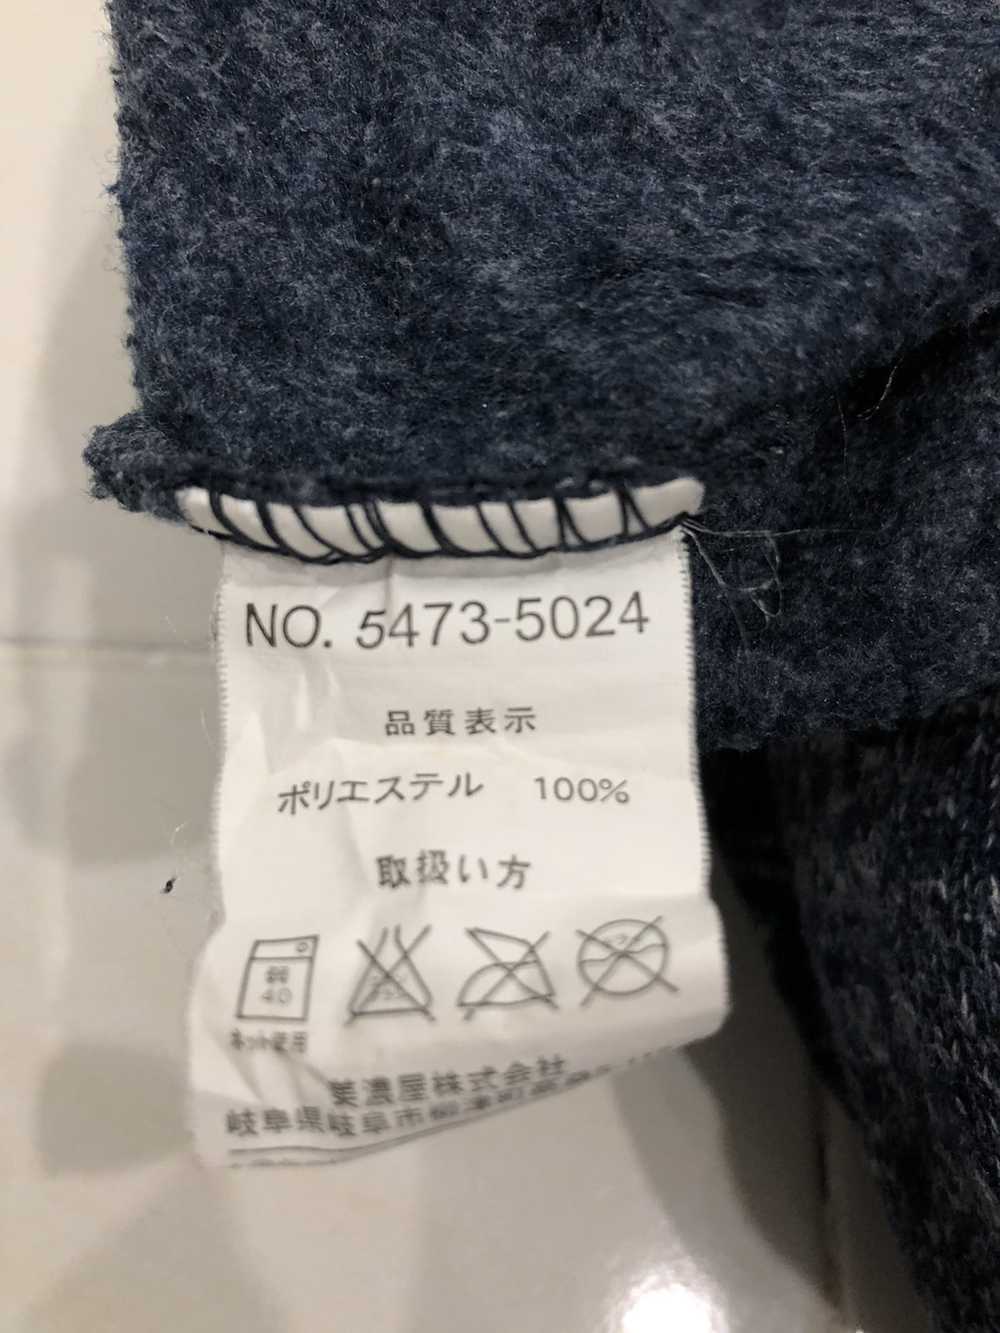 Japanese Brand Nebraska Hoodie Sweatshirt - image 6